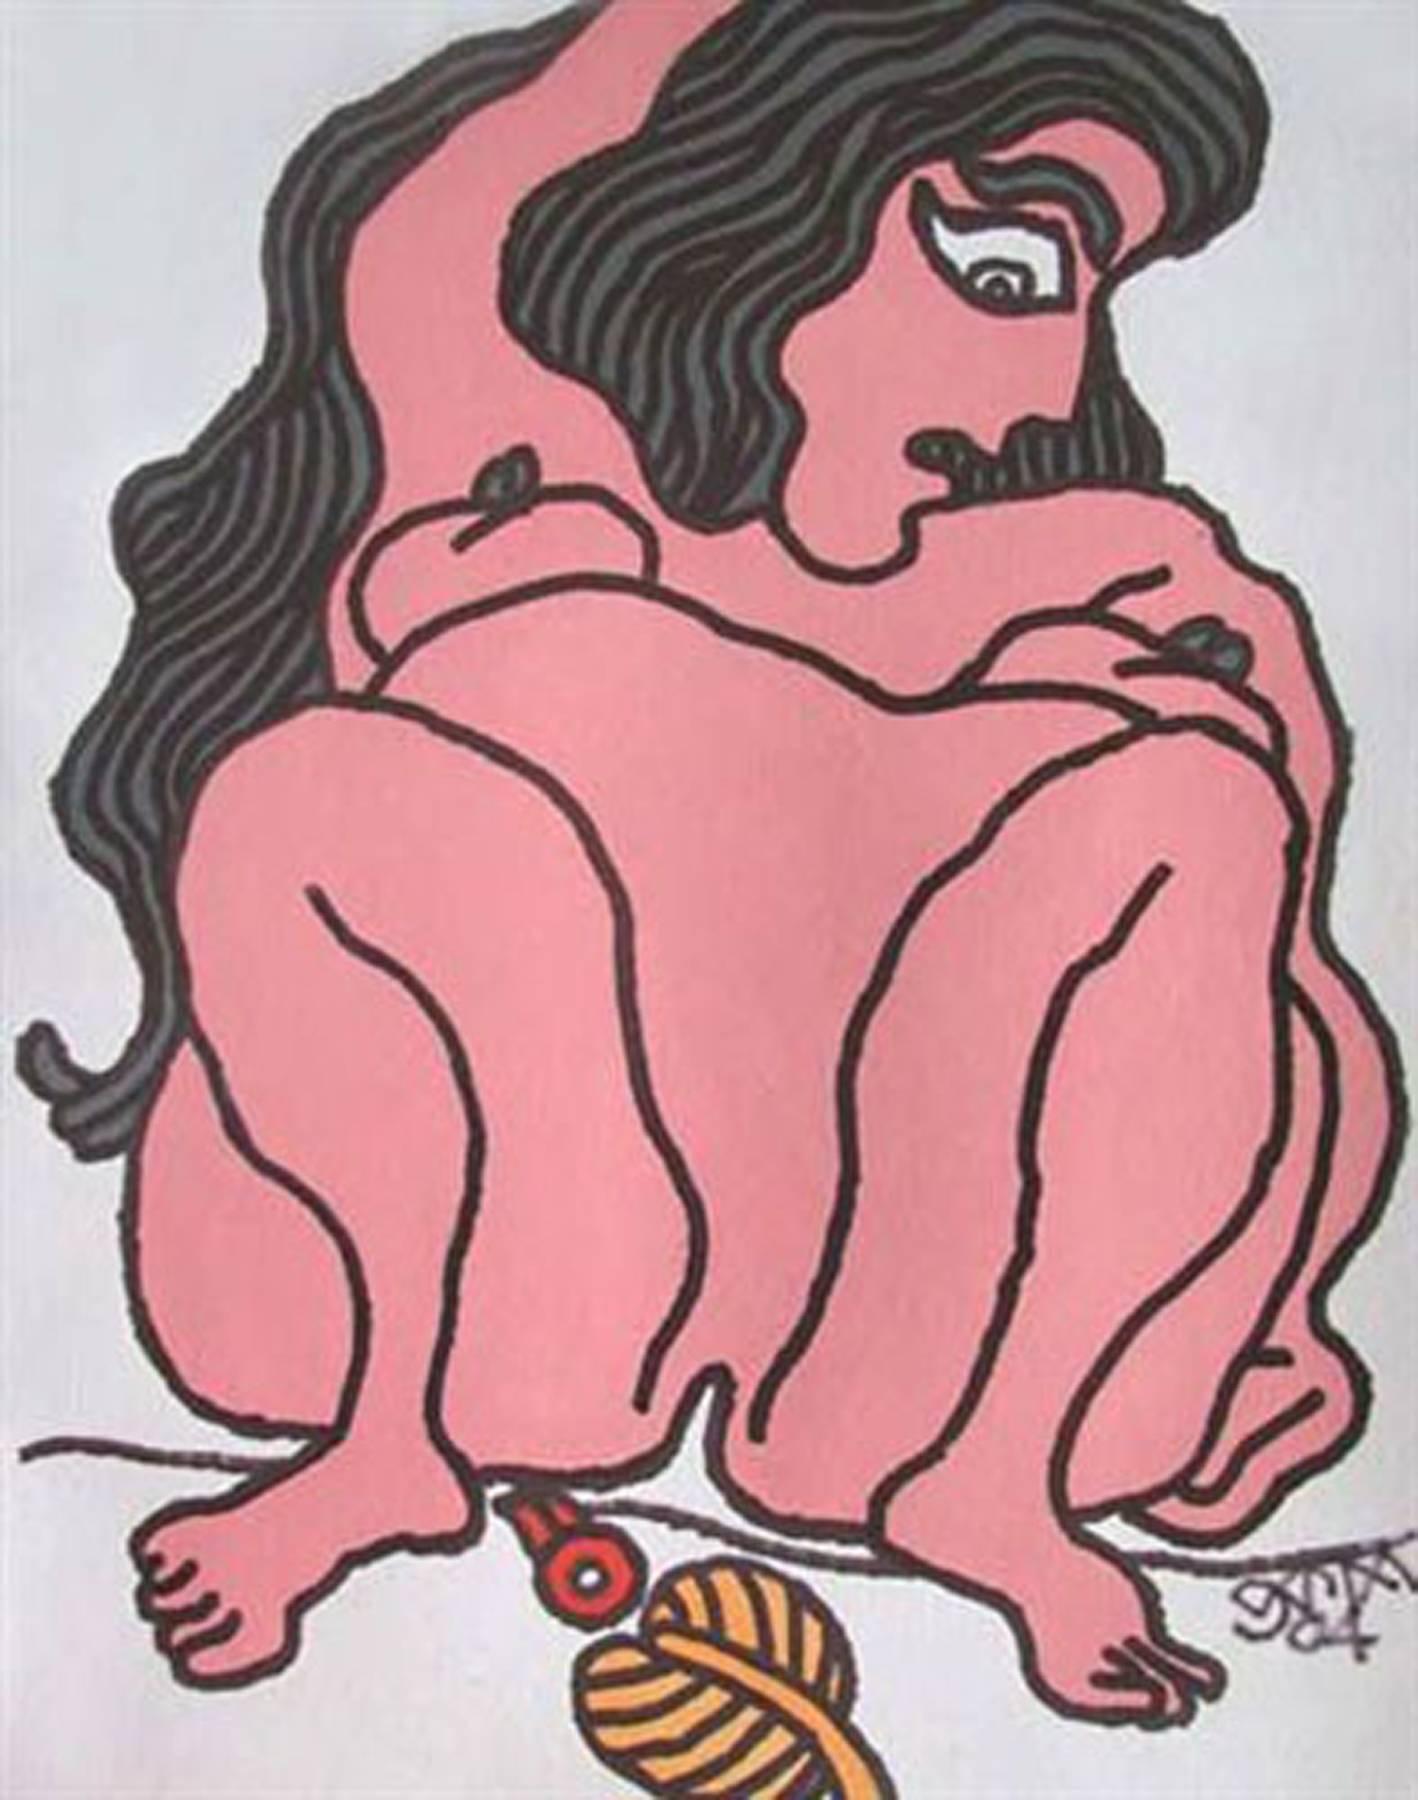 Prokash Karmakar Figurative Painting - Nude Women, Fish shaped Eyes, Long Hair, Bright Painting, Mixed Media "In Stock"